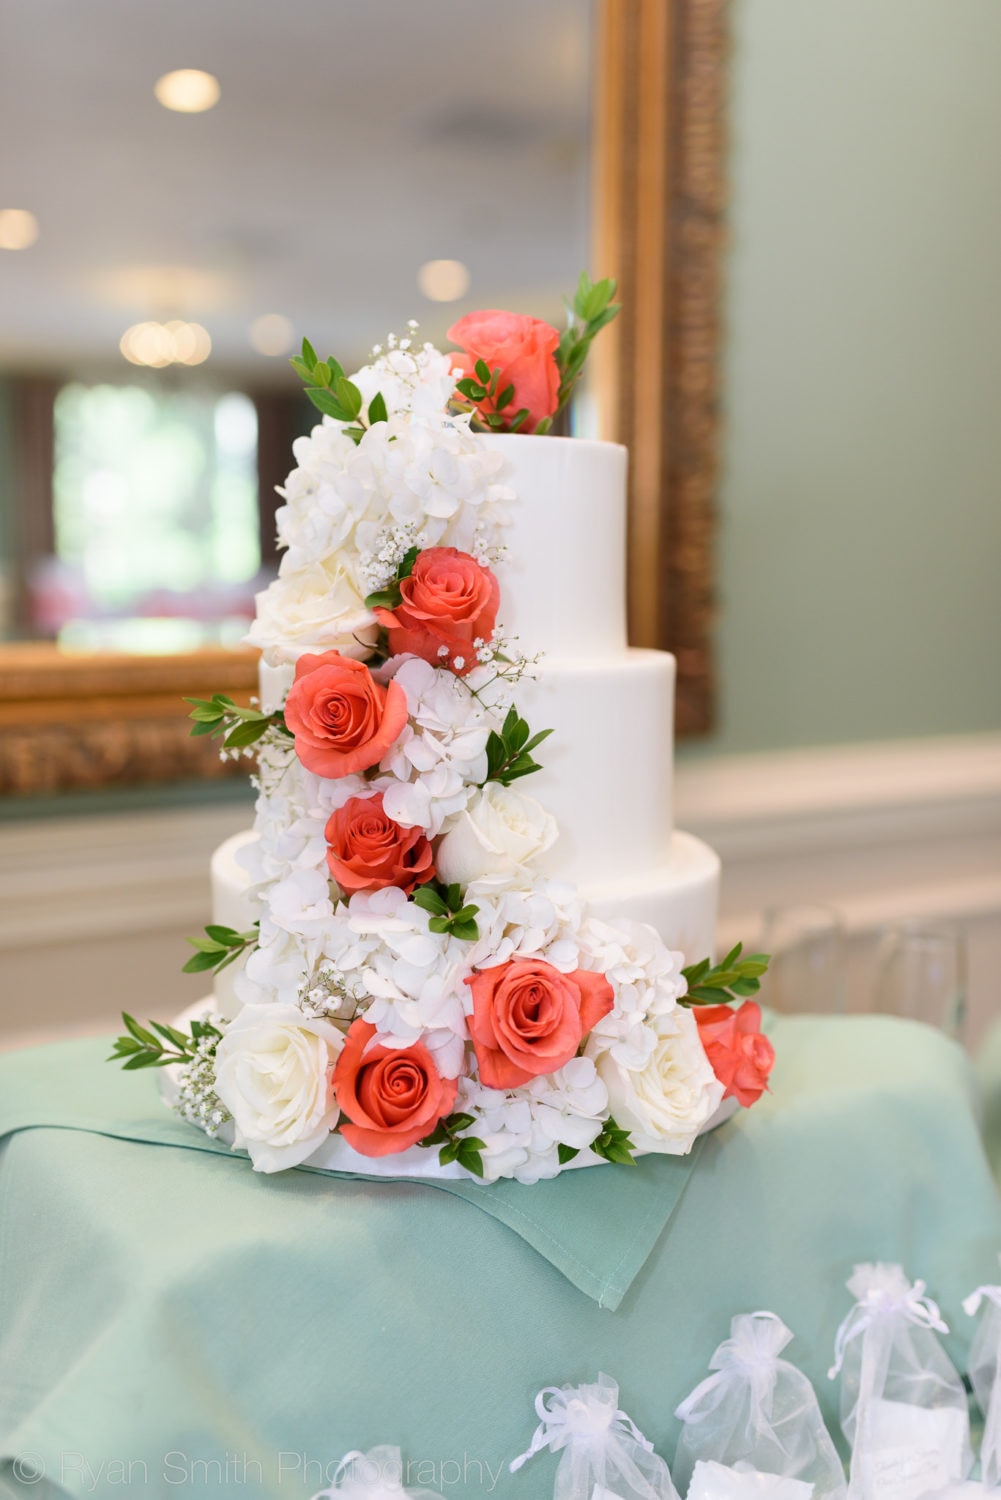 Wedding cake with flowers - Pawleys Plantation